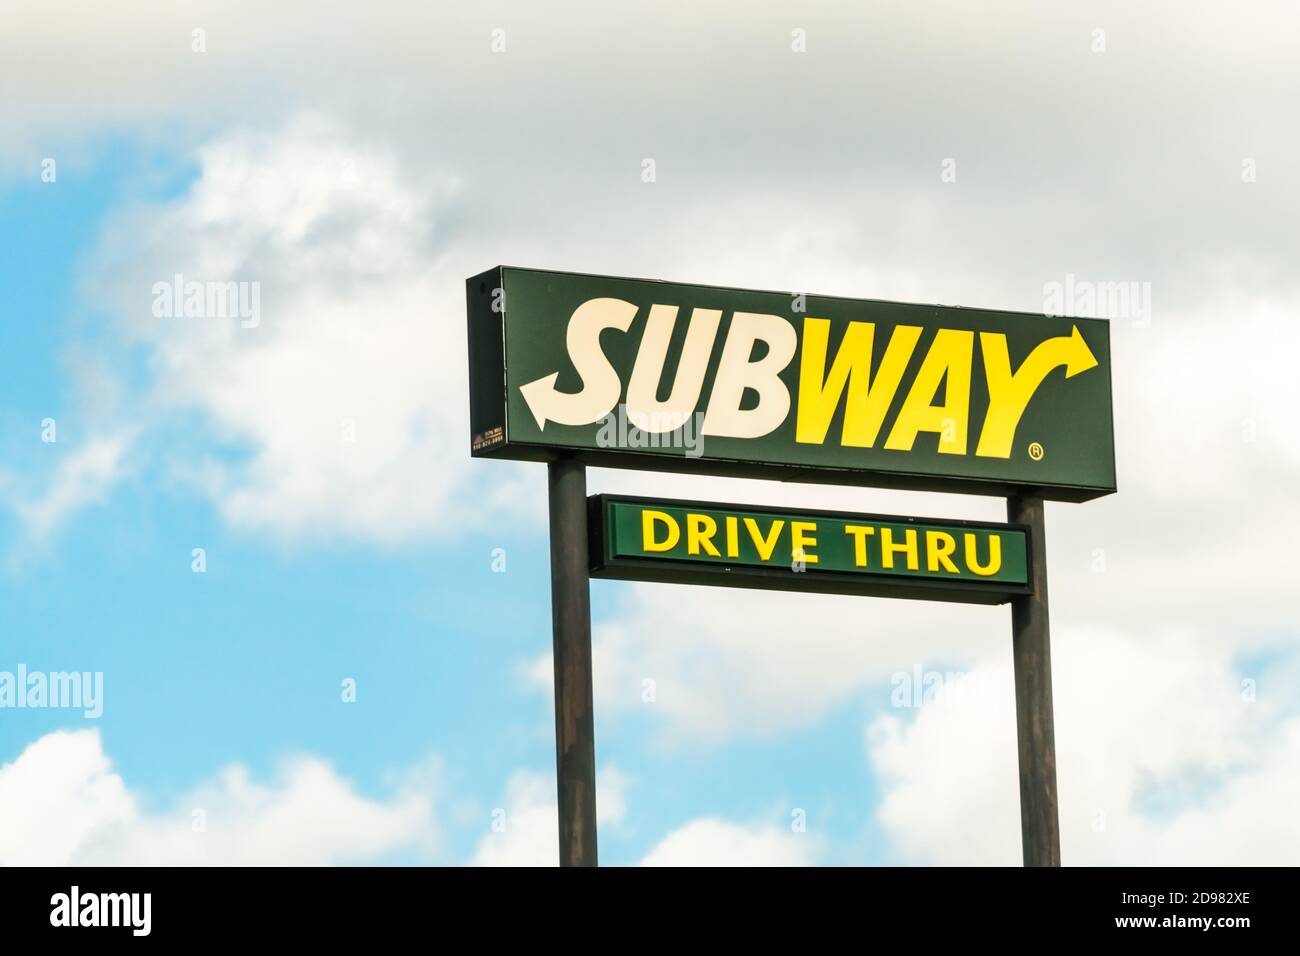 Subway sandwich shop highway restaurant sign. Stock Photo